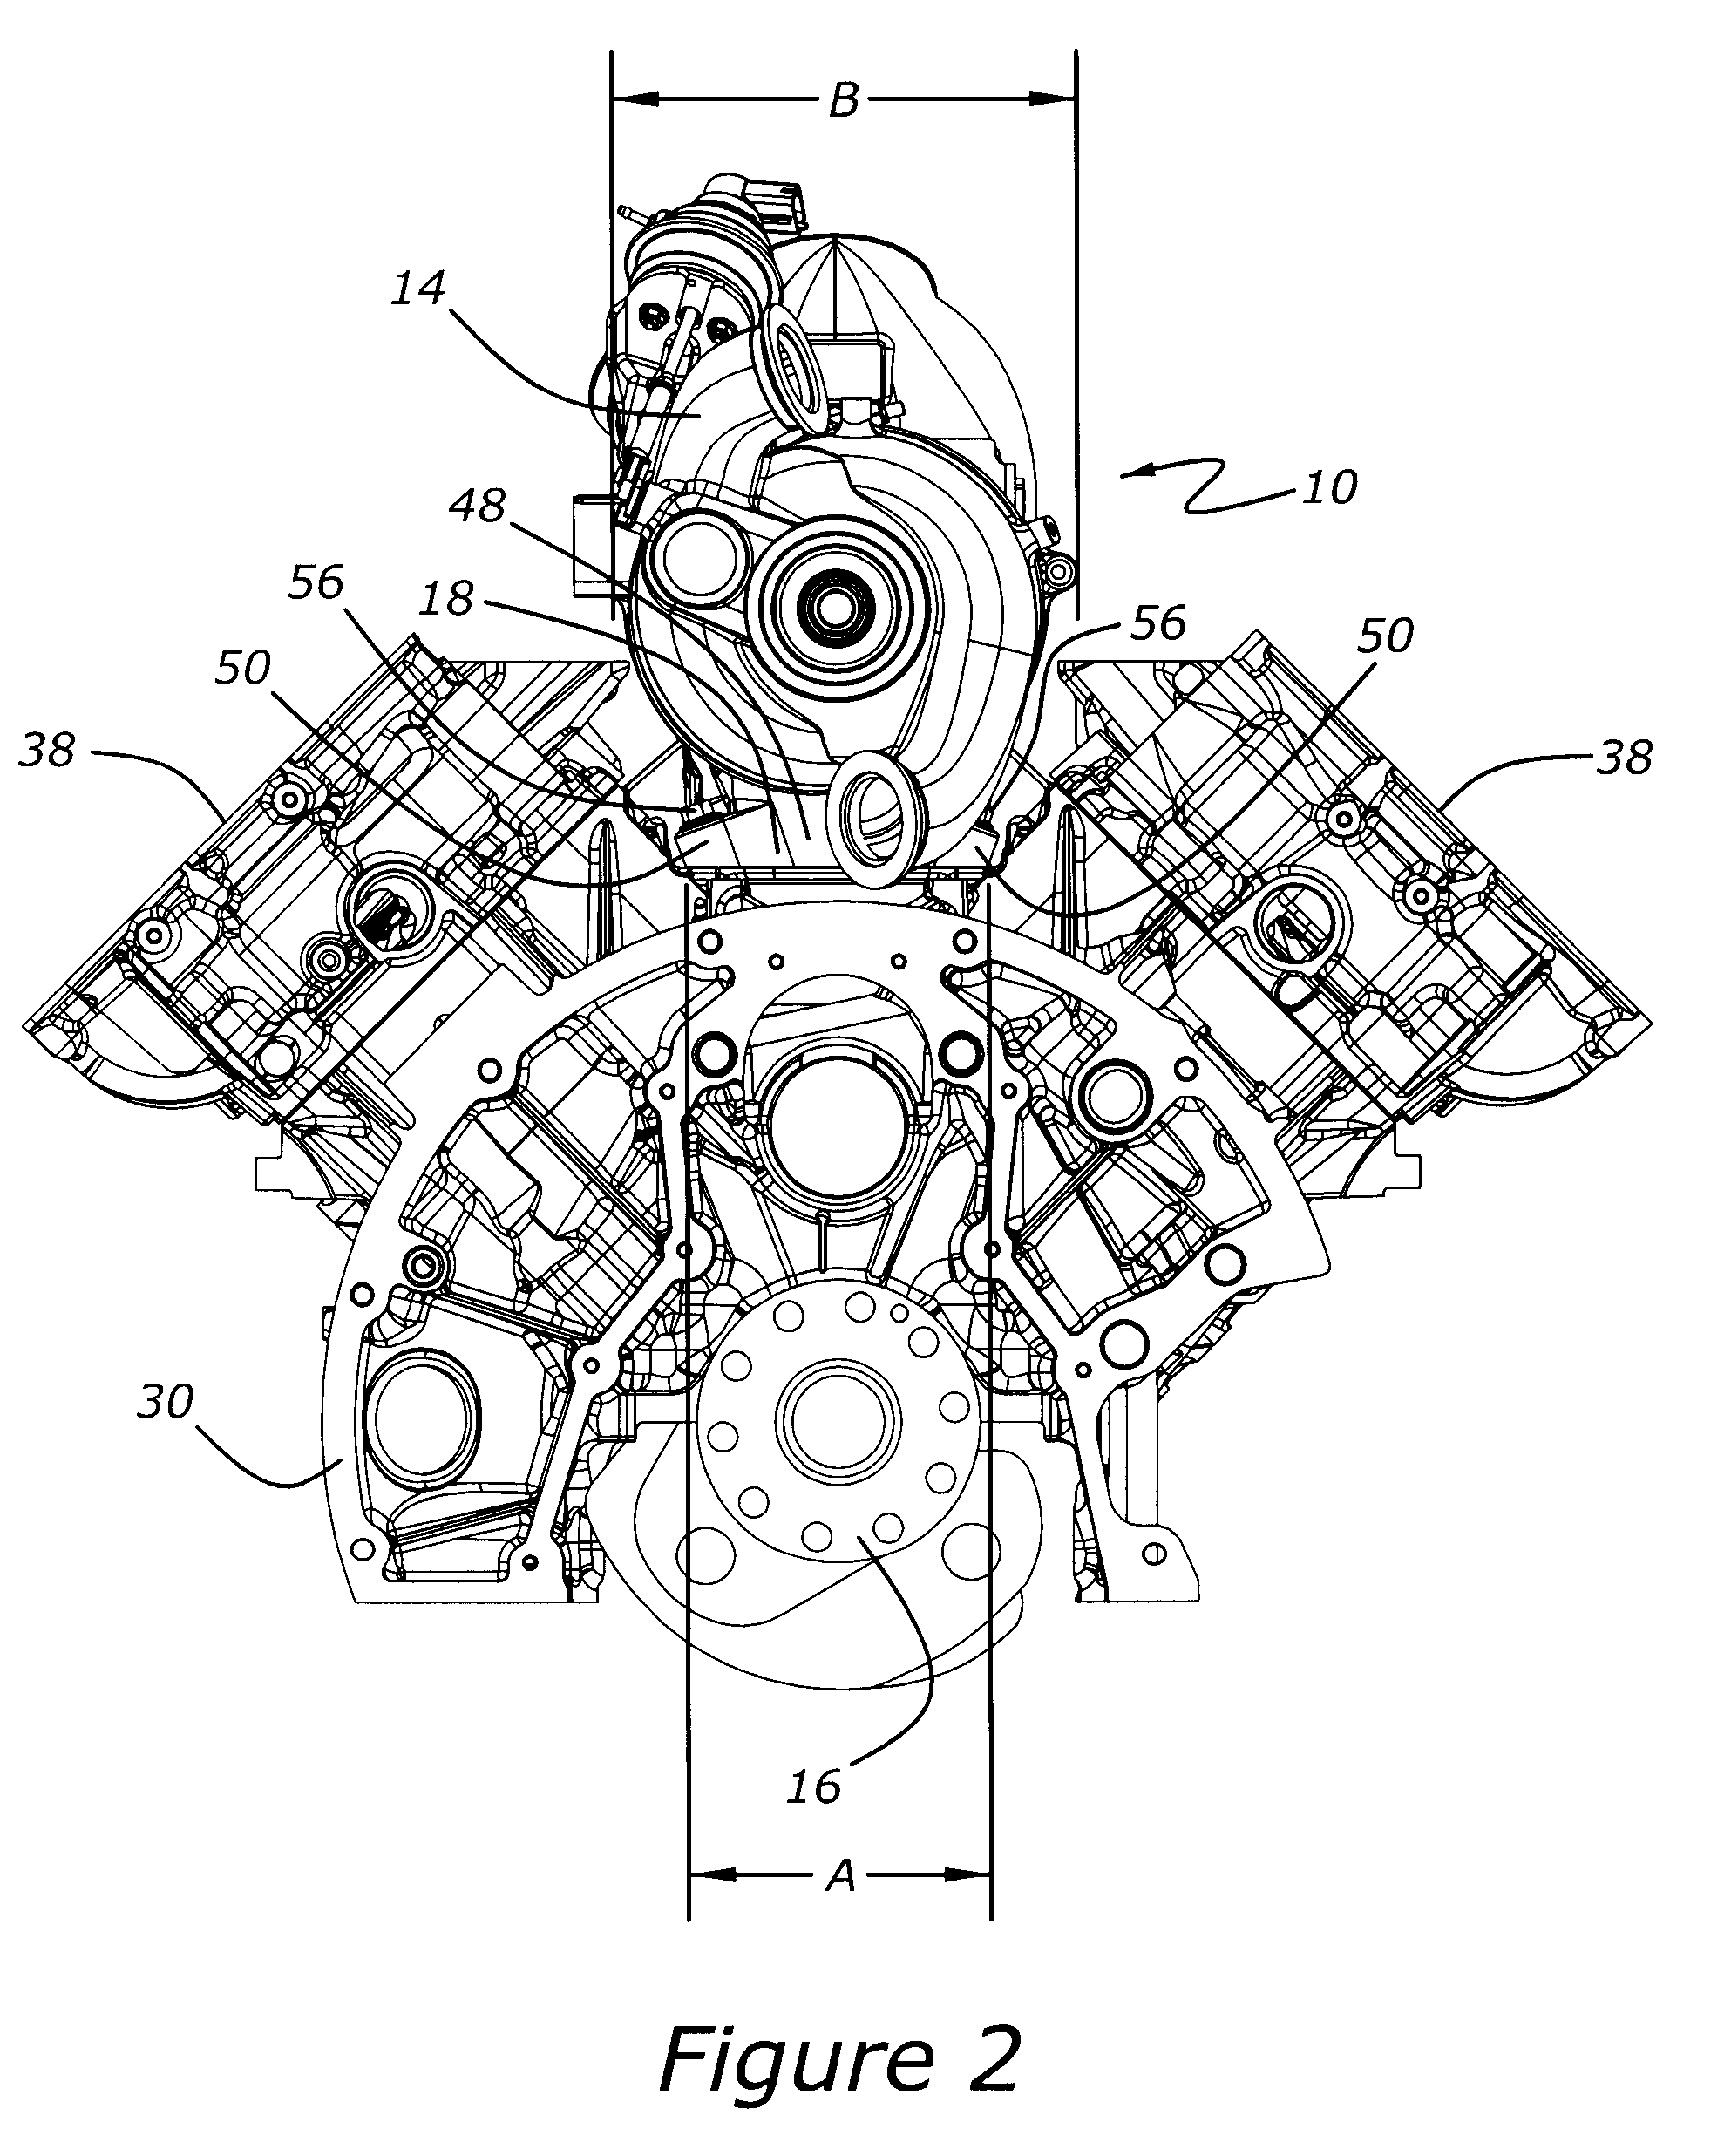 Pedestal mounted turbocharger system for internal combustion engine